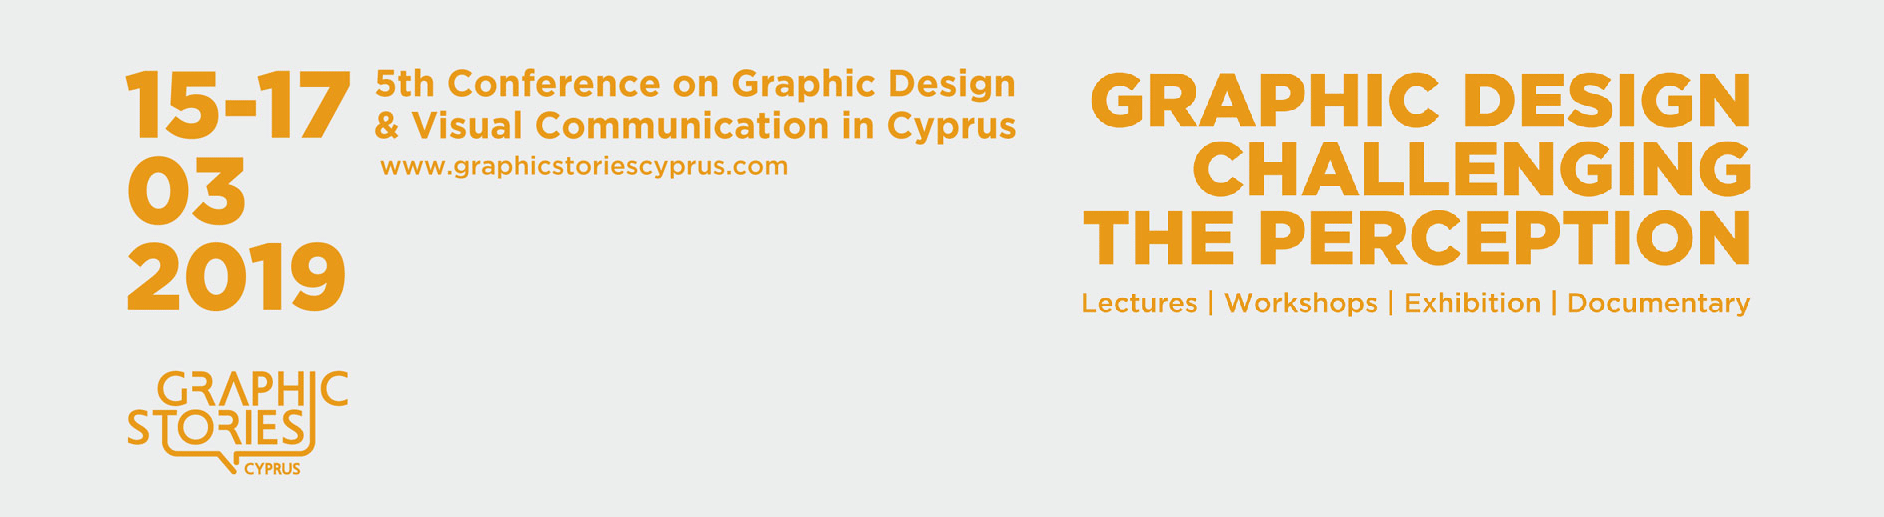 Graphic Stories Cyprus 5